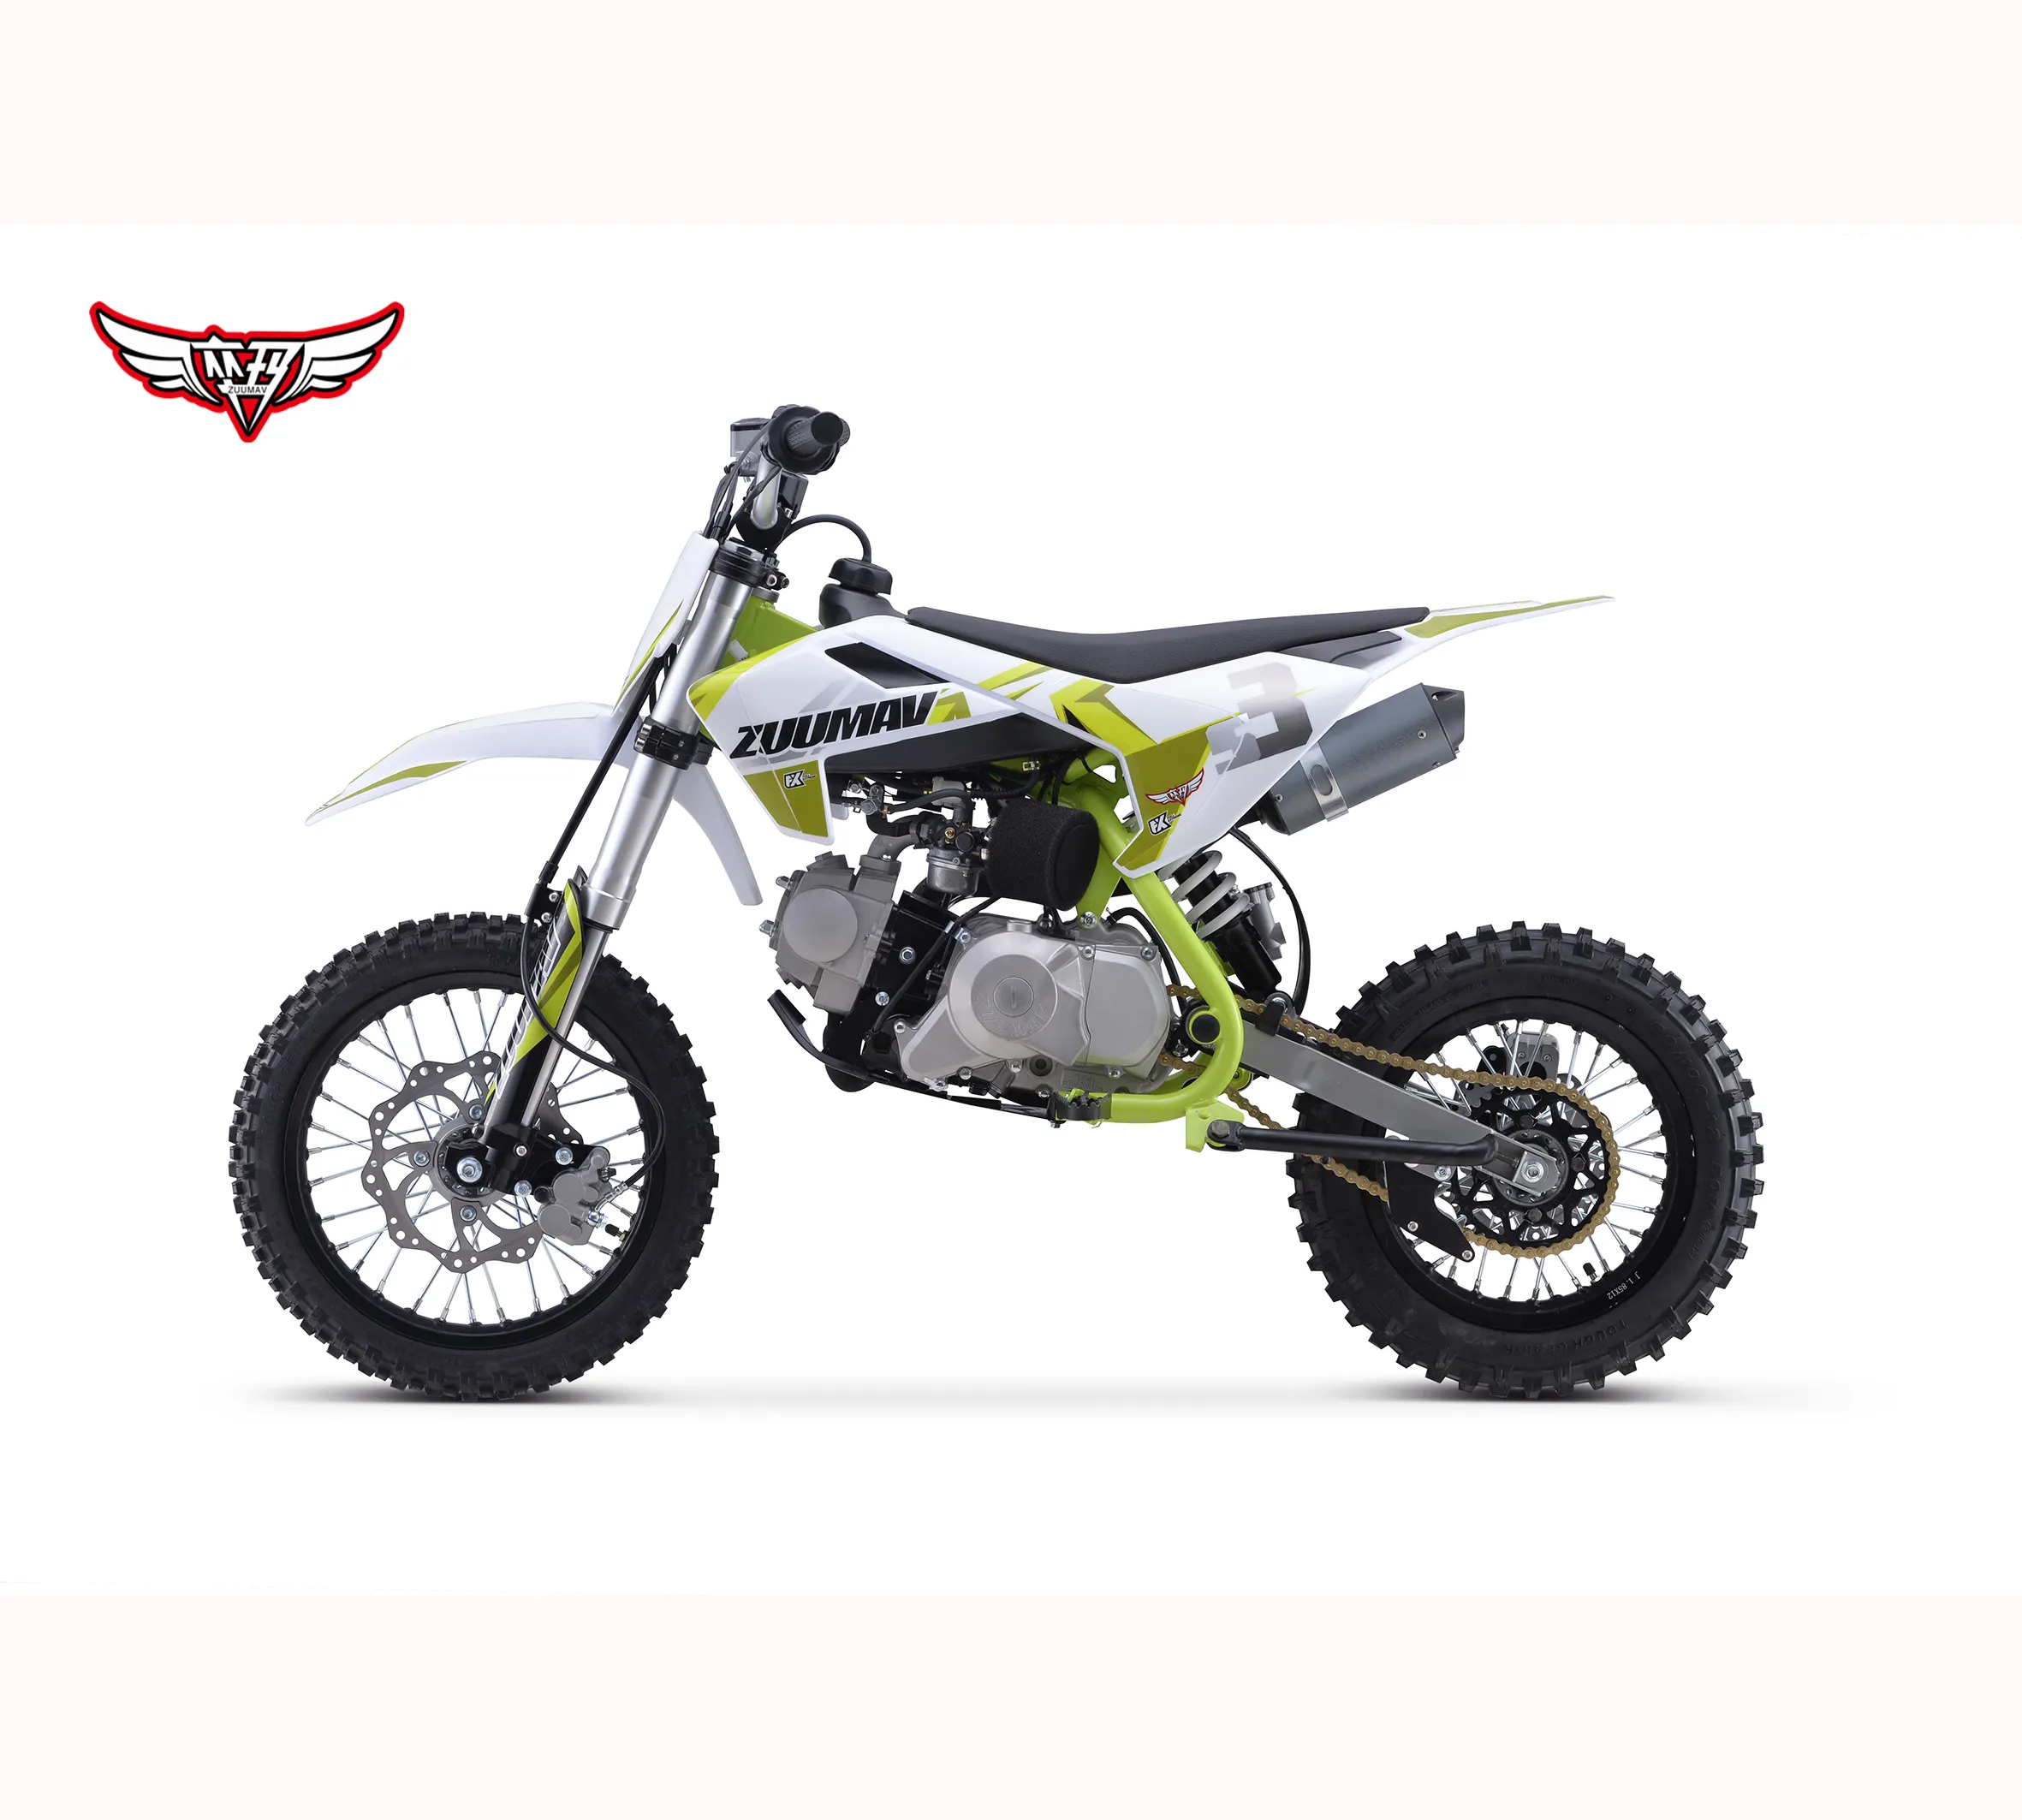 Zuumav High quality 110cc Dirt Bike Motorcycles for Teenagers